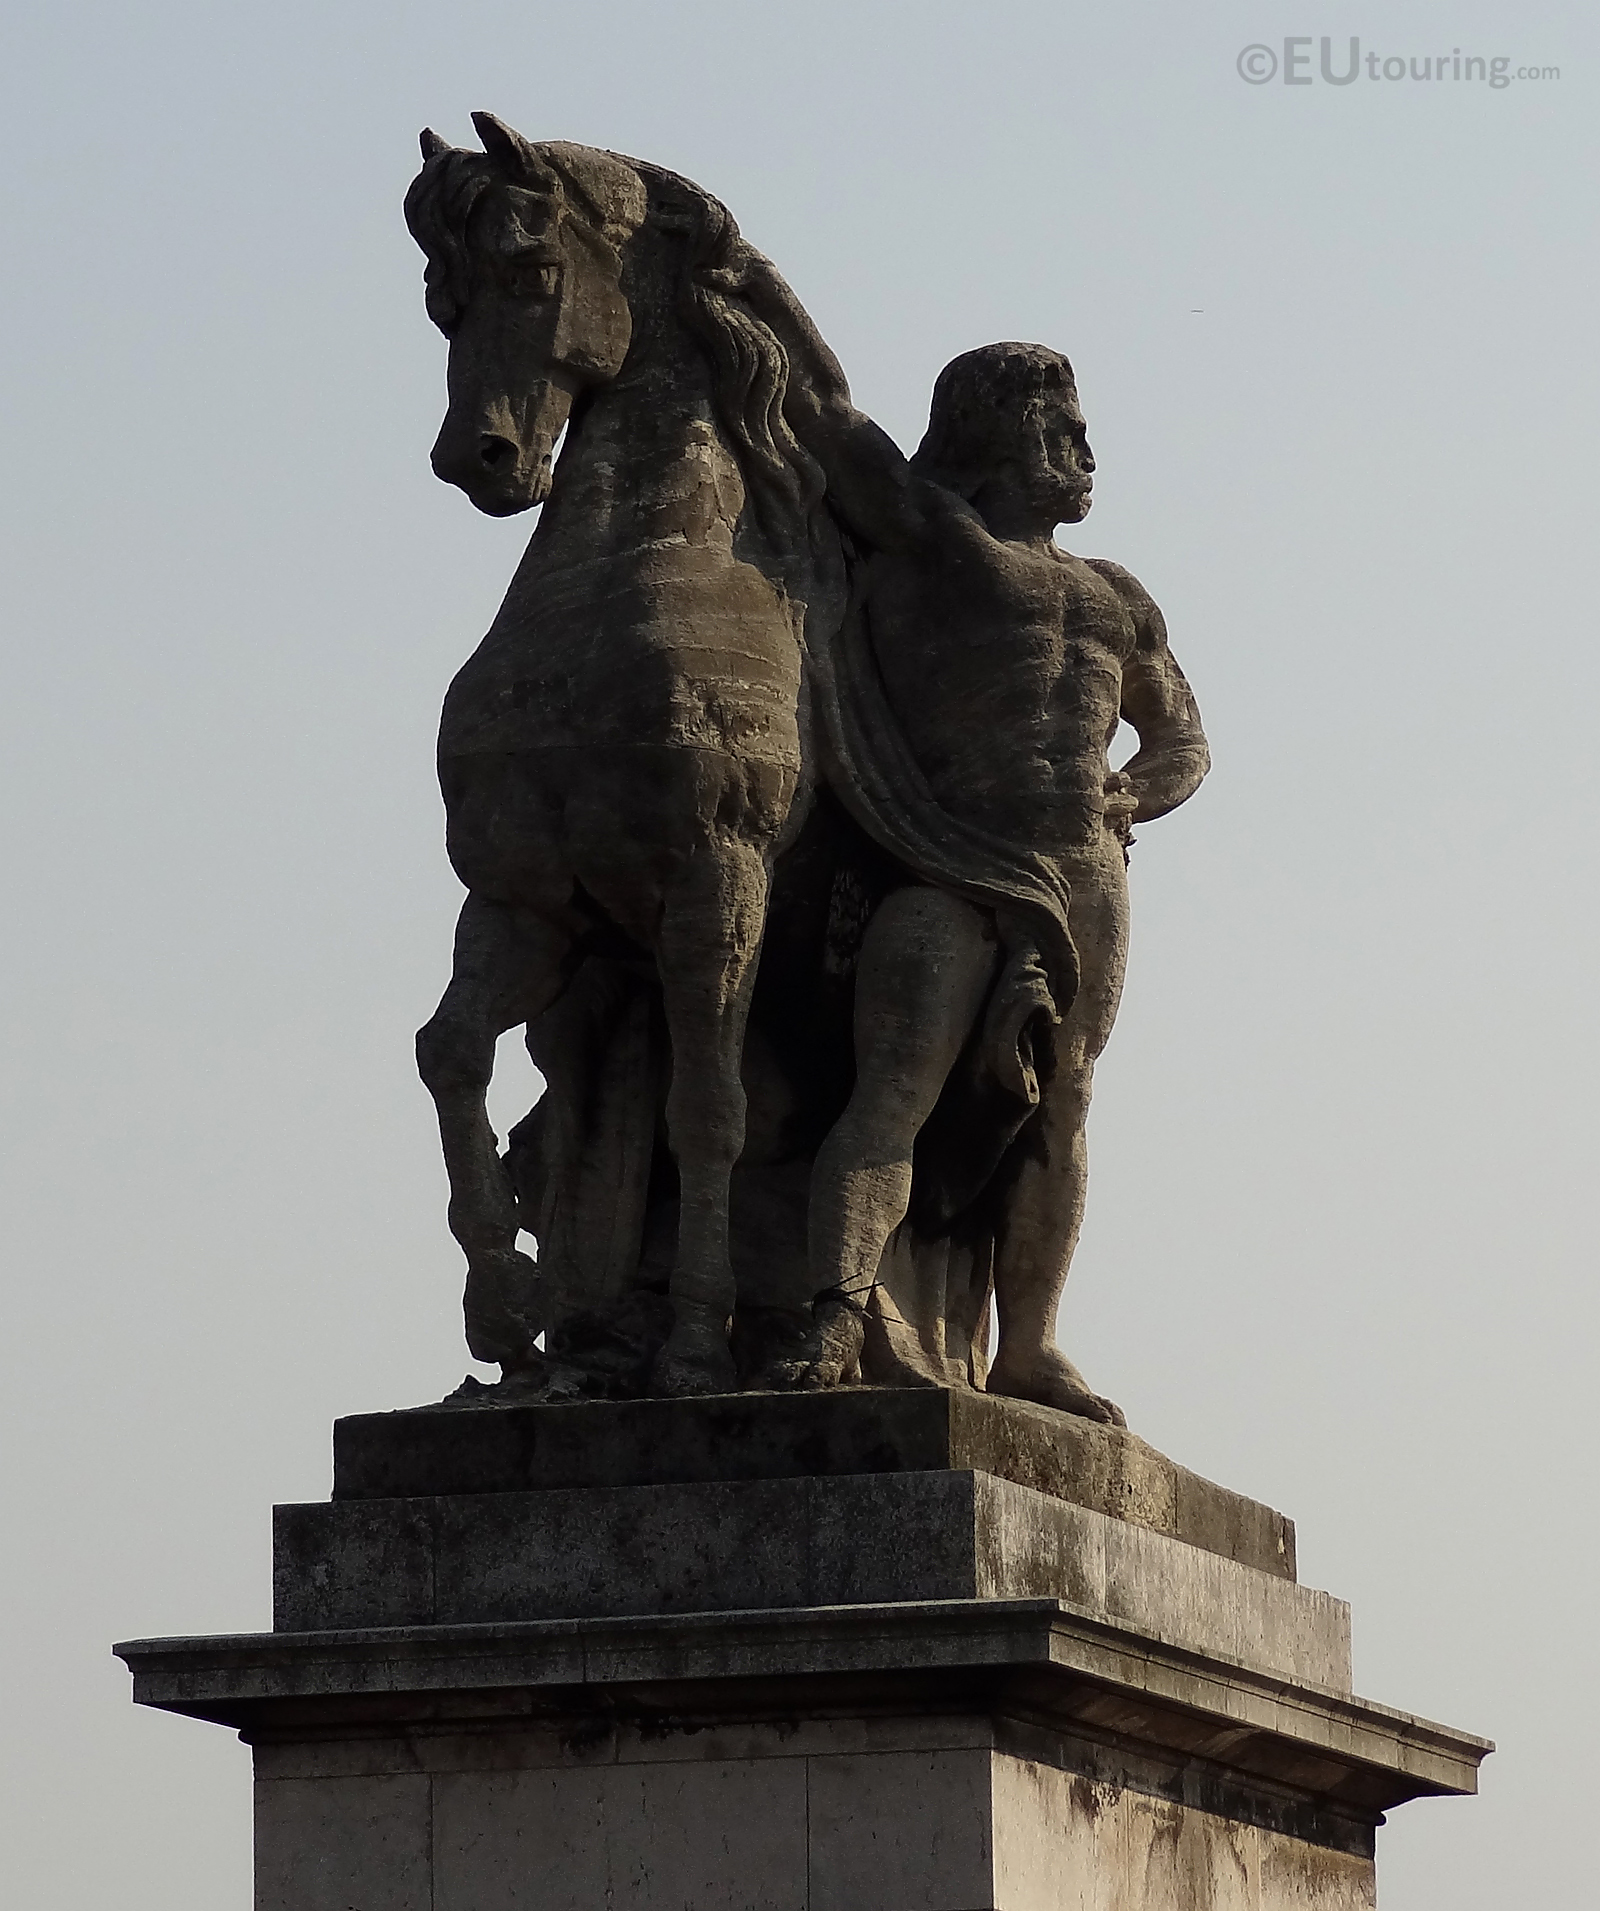 Gallic Warrior statue on Pont d'Iena